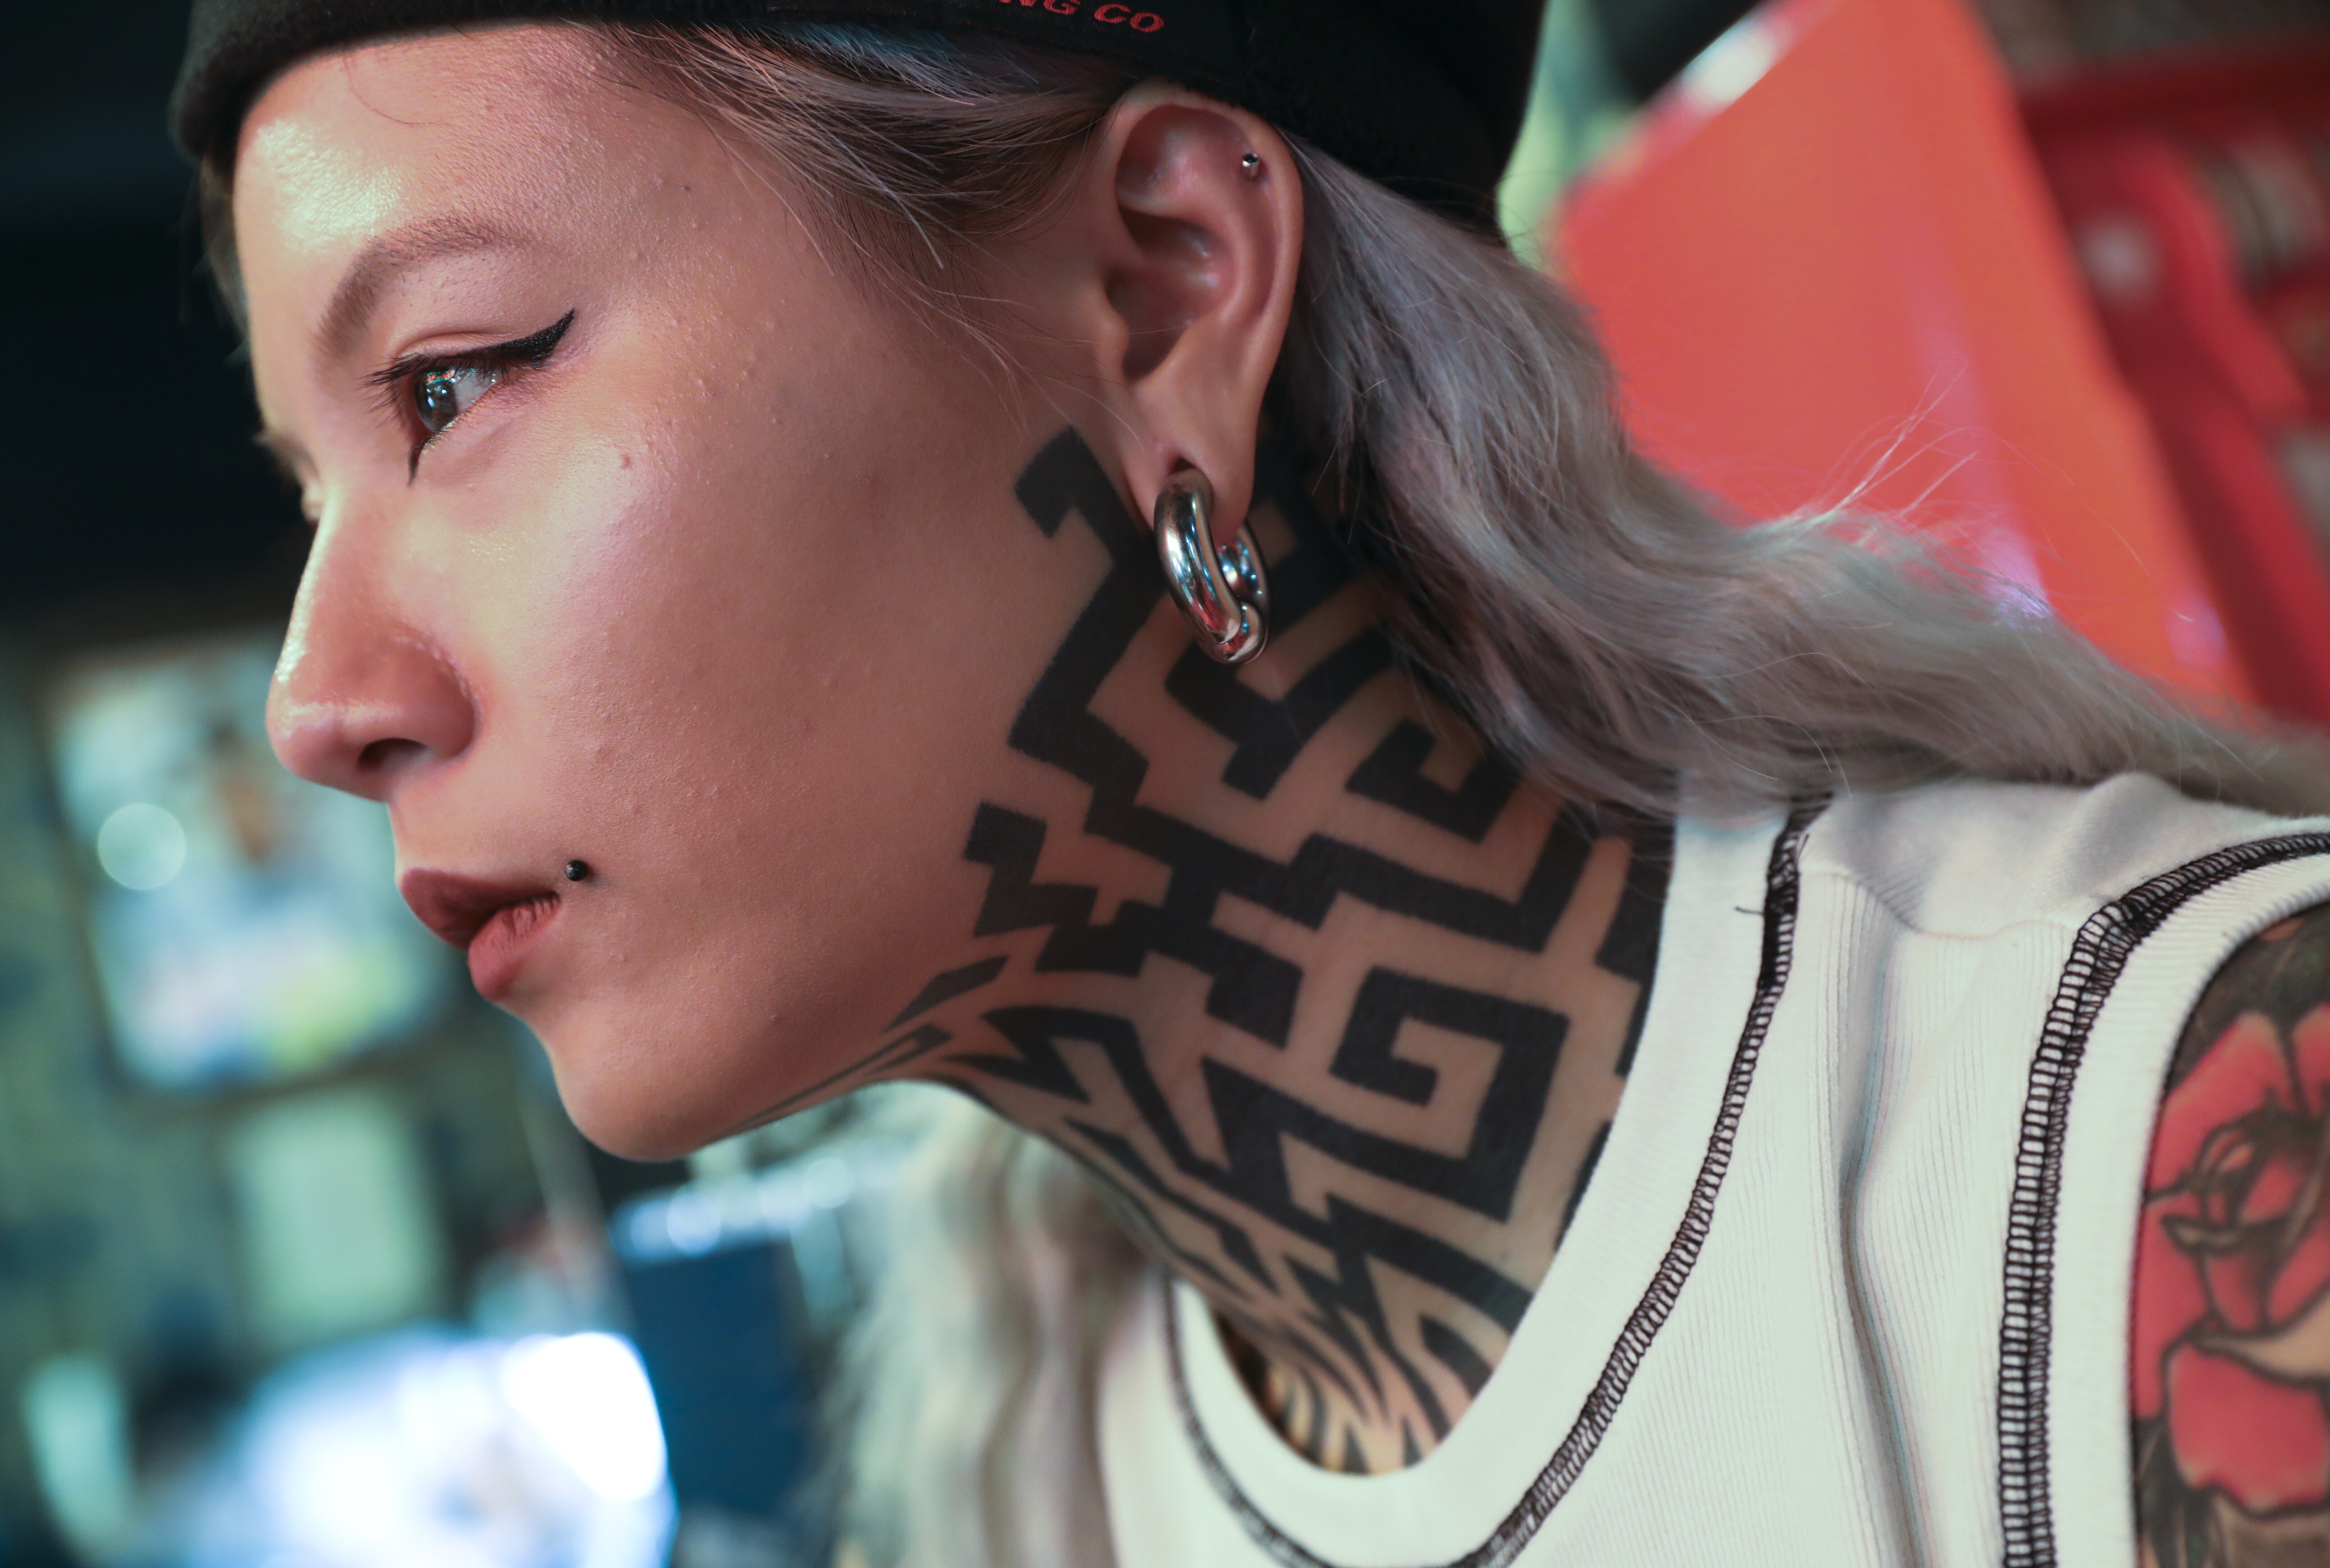 Vine Ear Tattoos Are Going Viral on Instagram  Ear Tattoo Idea